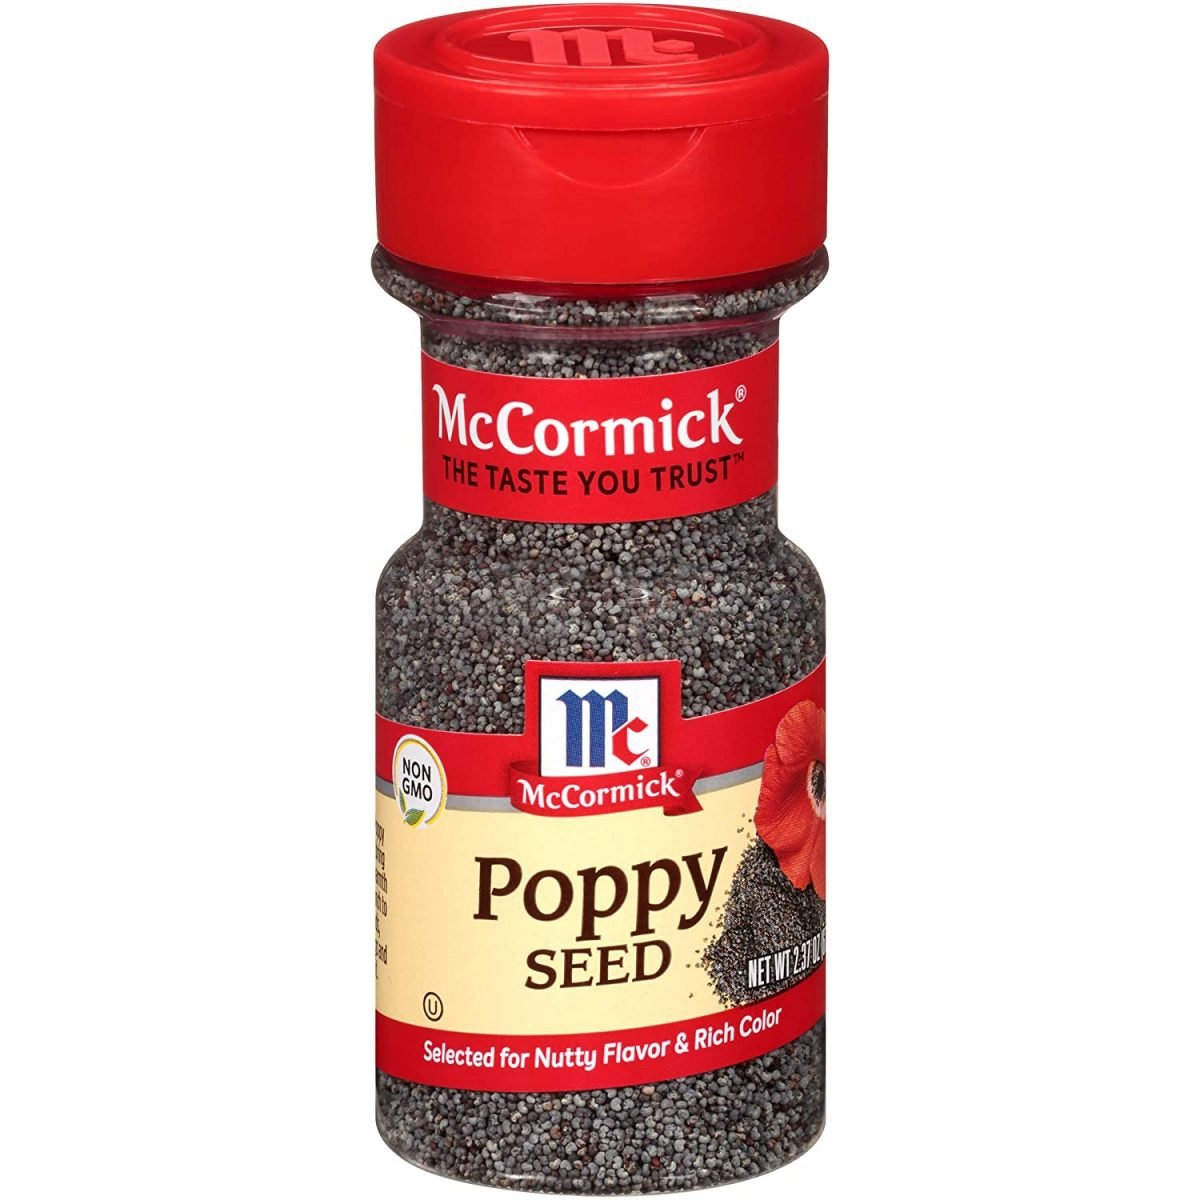 McCormick Poppy Seed
